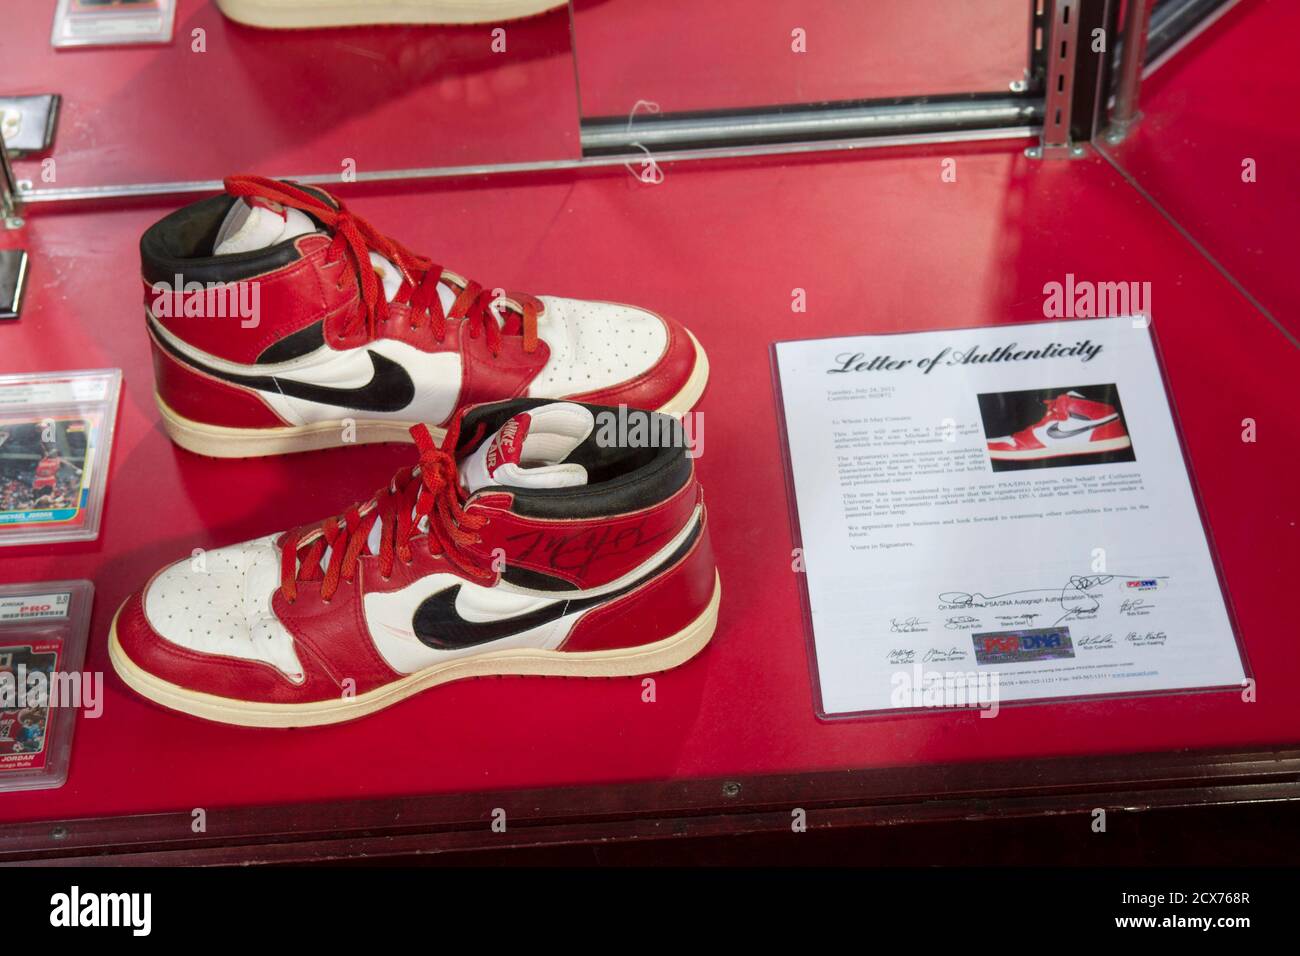 Nike air jordan sneakers hi-res stock photography and images - Alamy